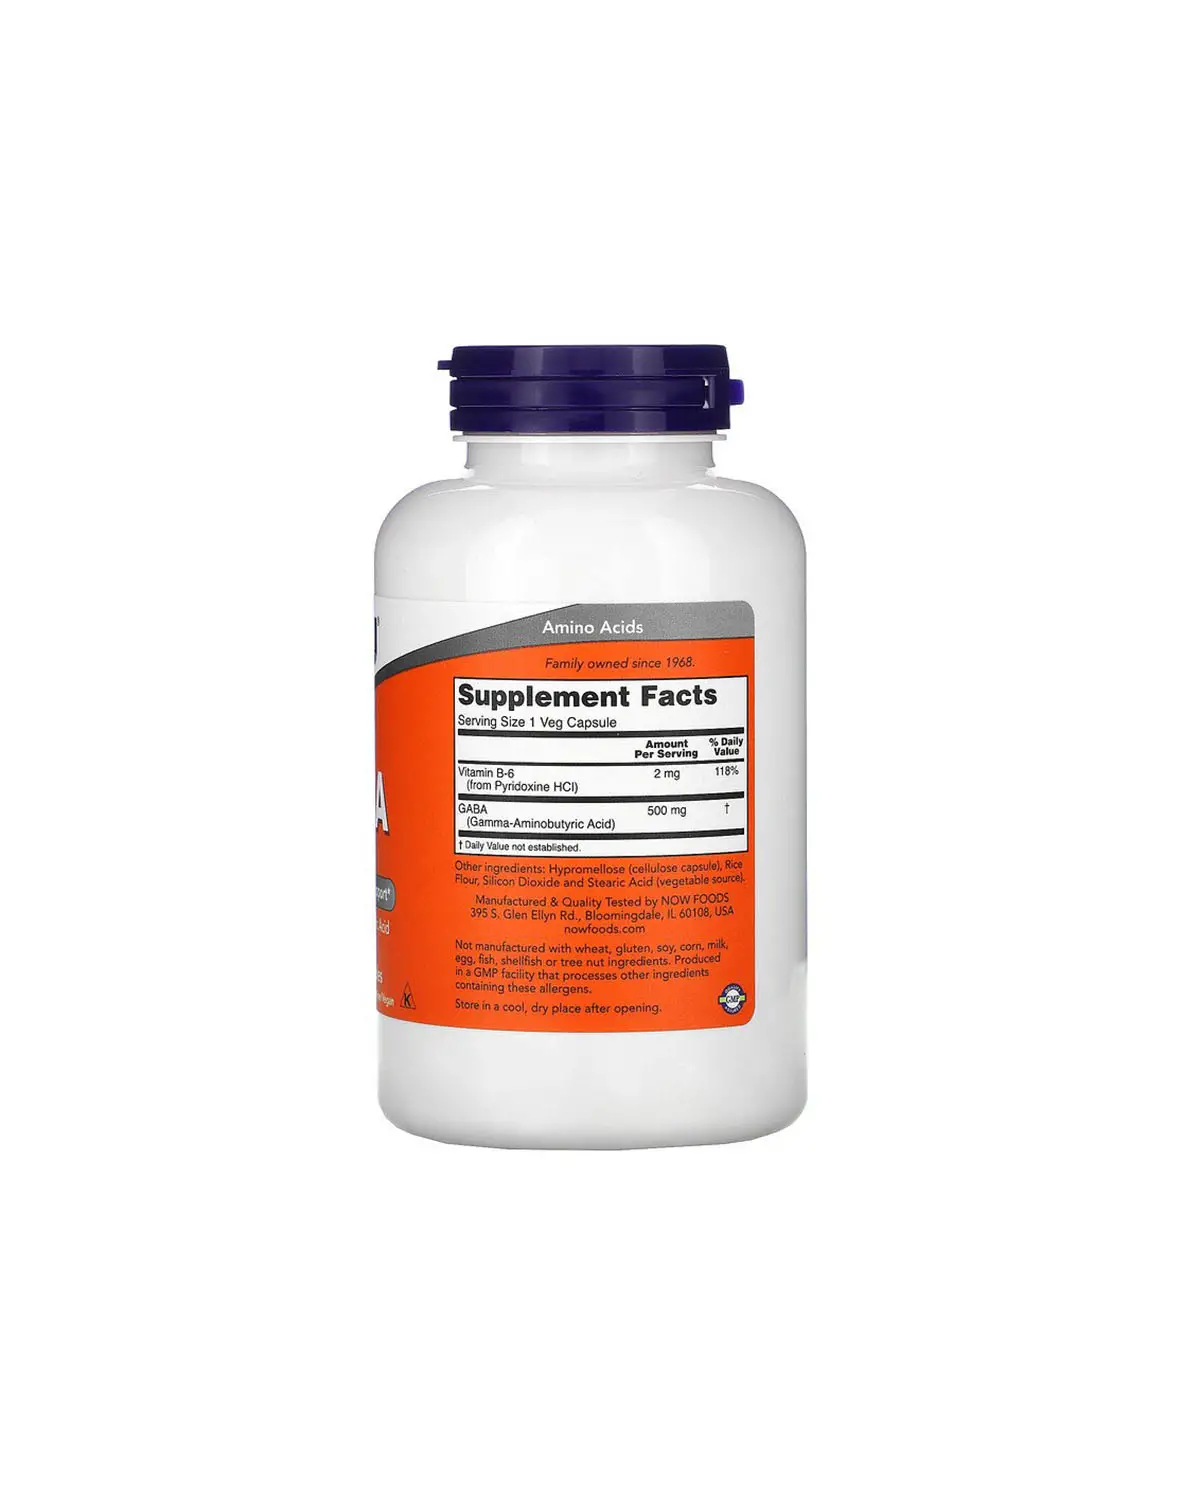 Гамма-аминомасляная кислота (GABA)+ B6 500 мг | 200 кап Now Foods